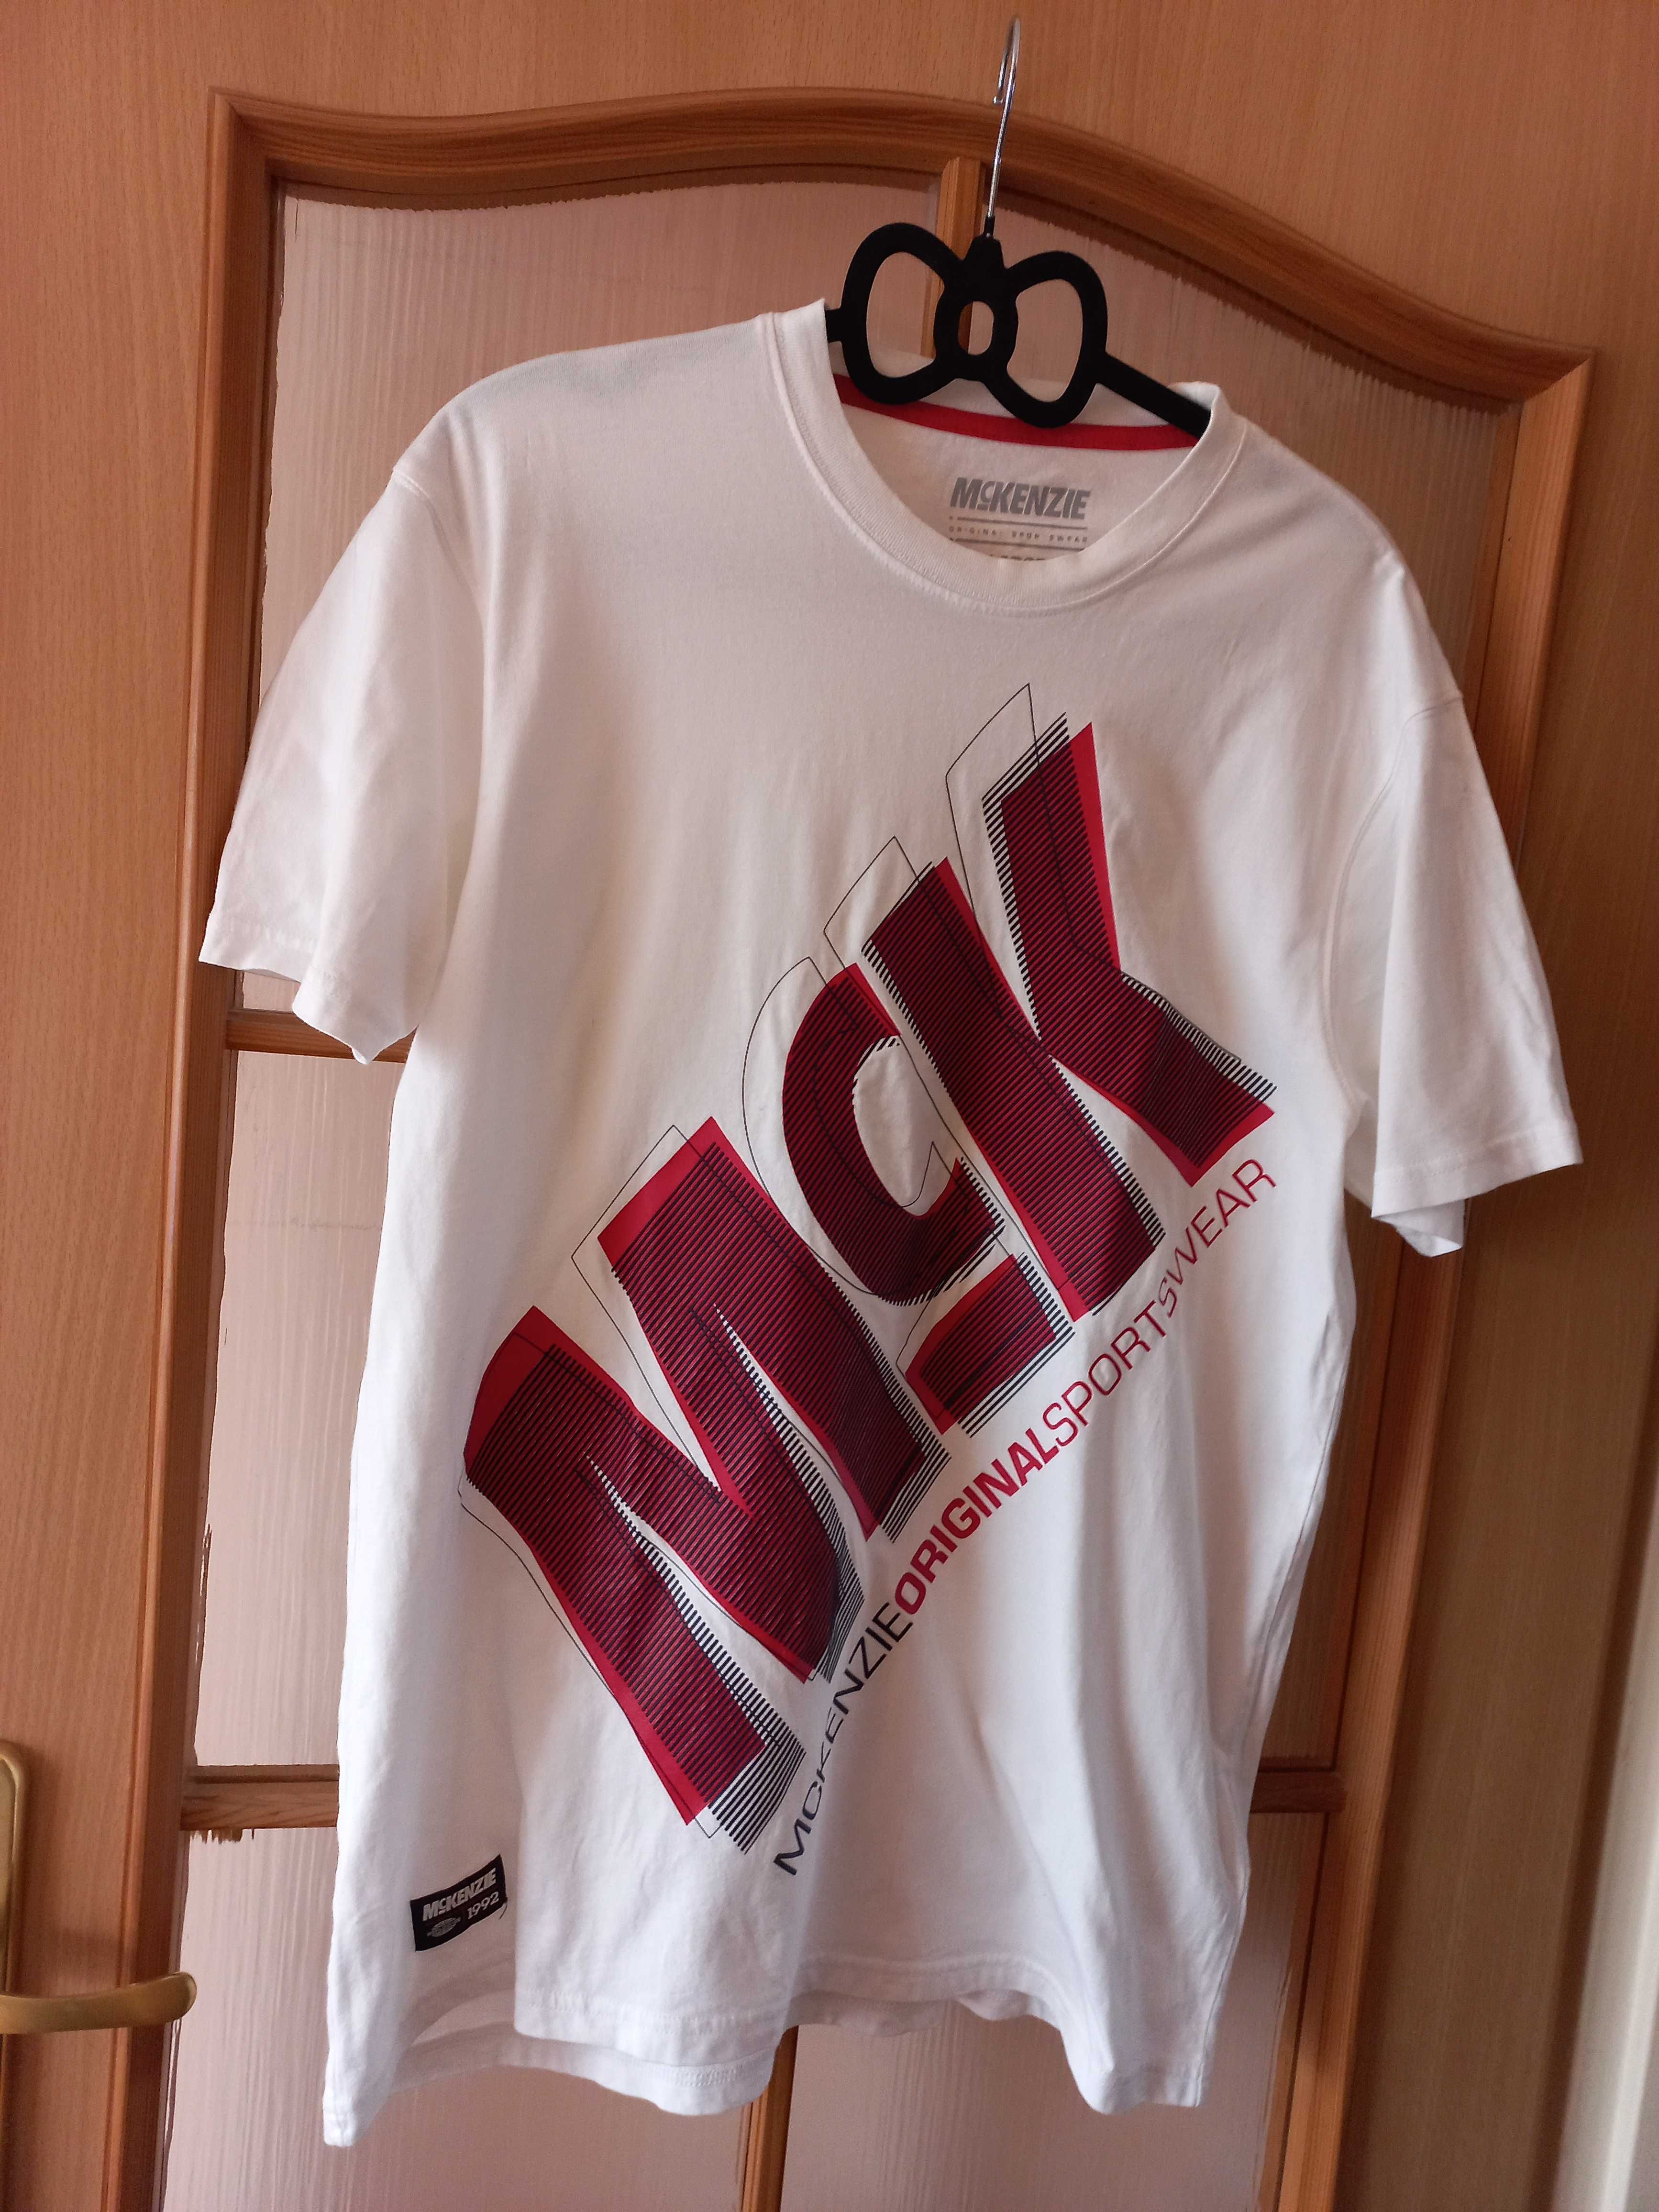 McKenzie T-shirt koszulka męska rozmiar L